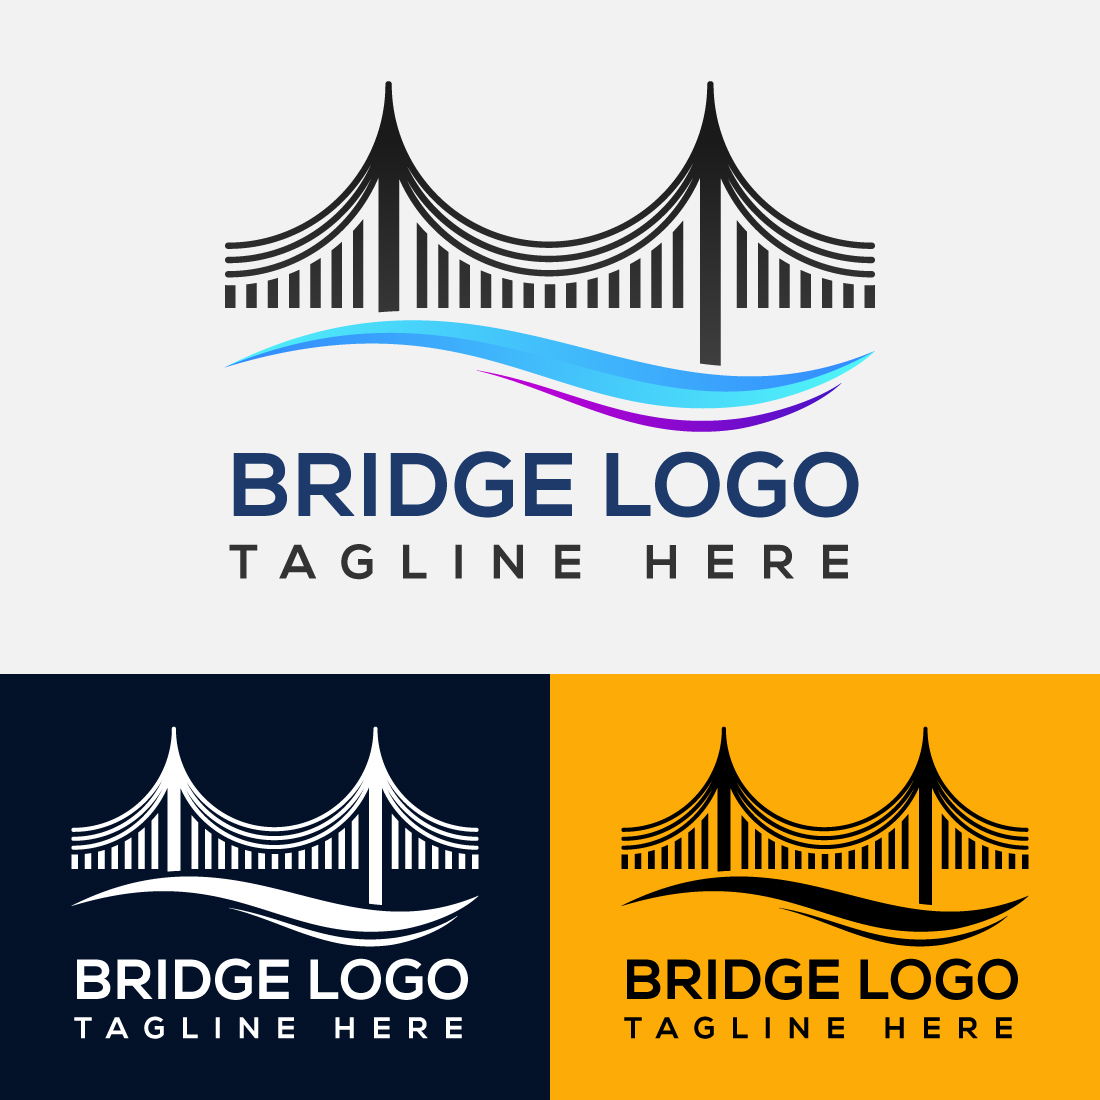 Bridge Vector Logo Template for Construction Business main cover.